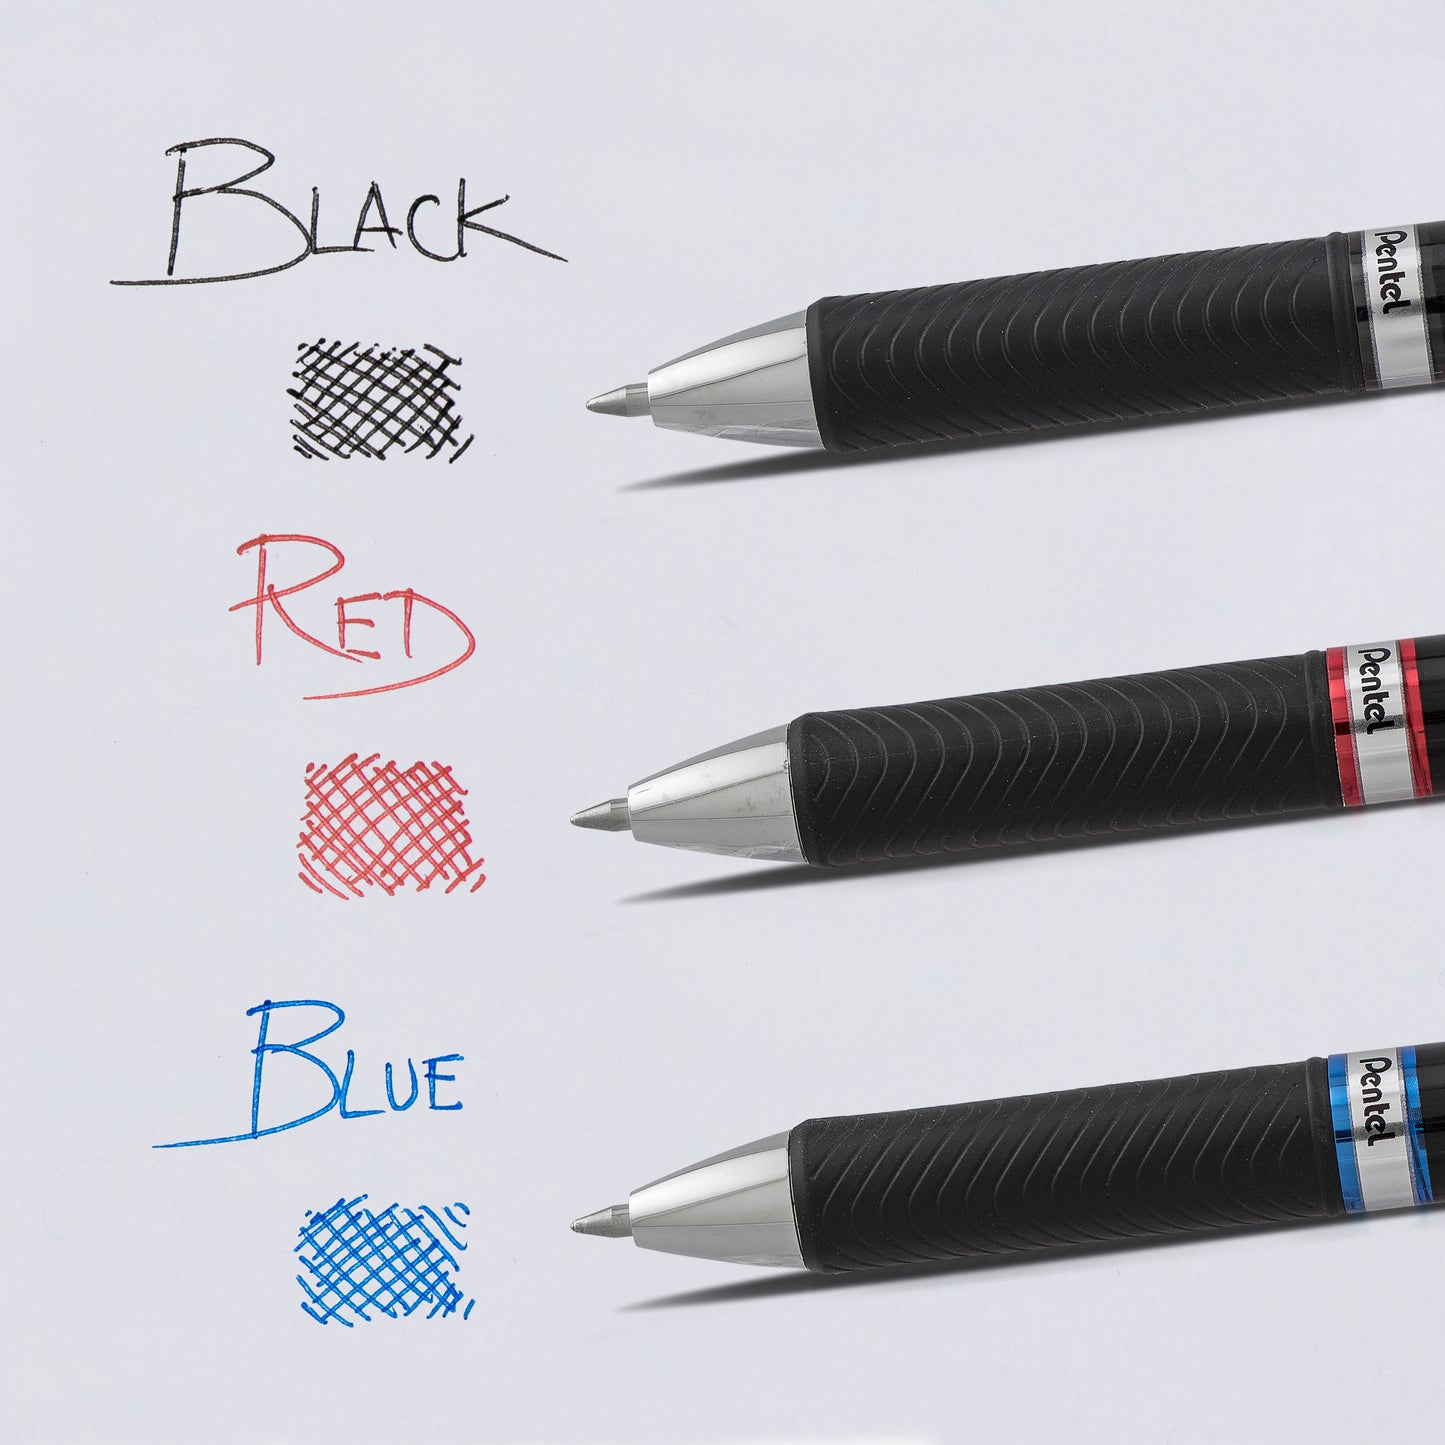 EnerGel PRO Permanent Gel Pen, (0.7mm) Medium Line, Assorted Ink (ABC), 3-Pk